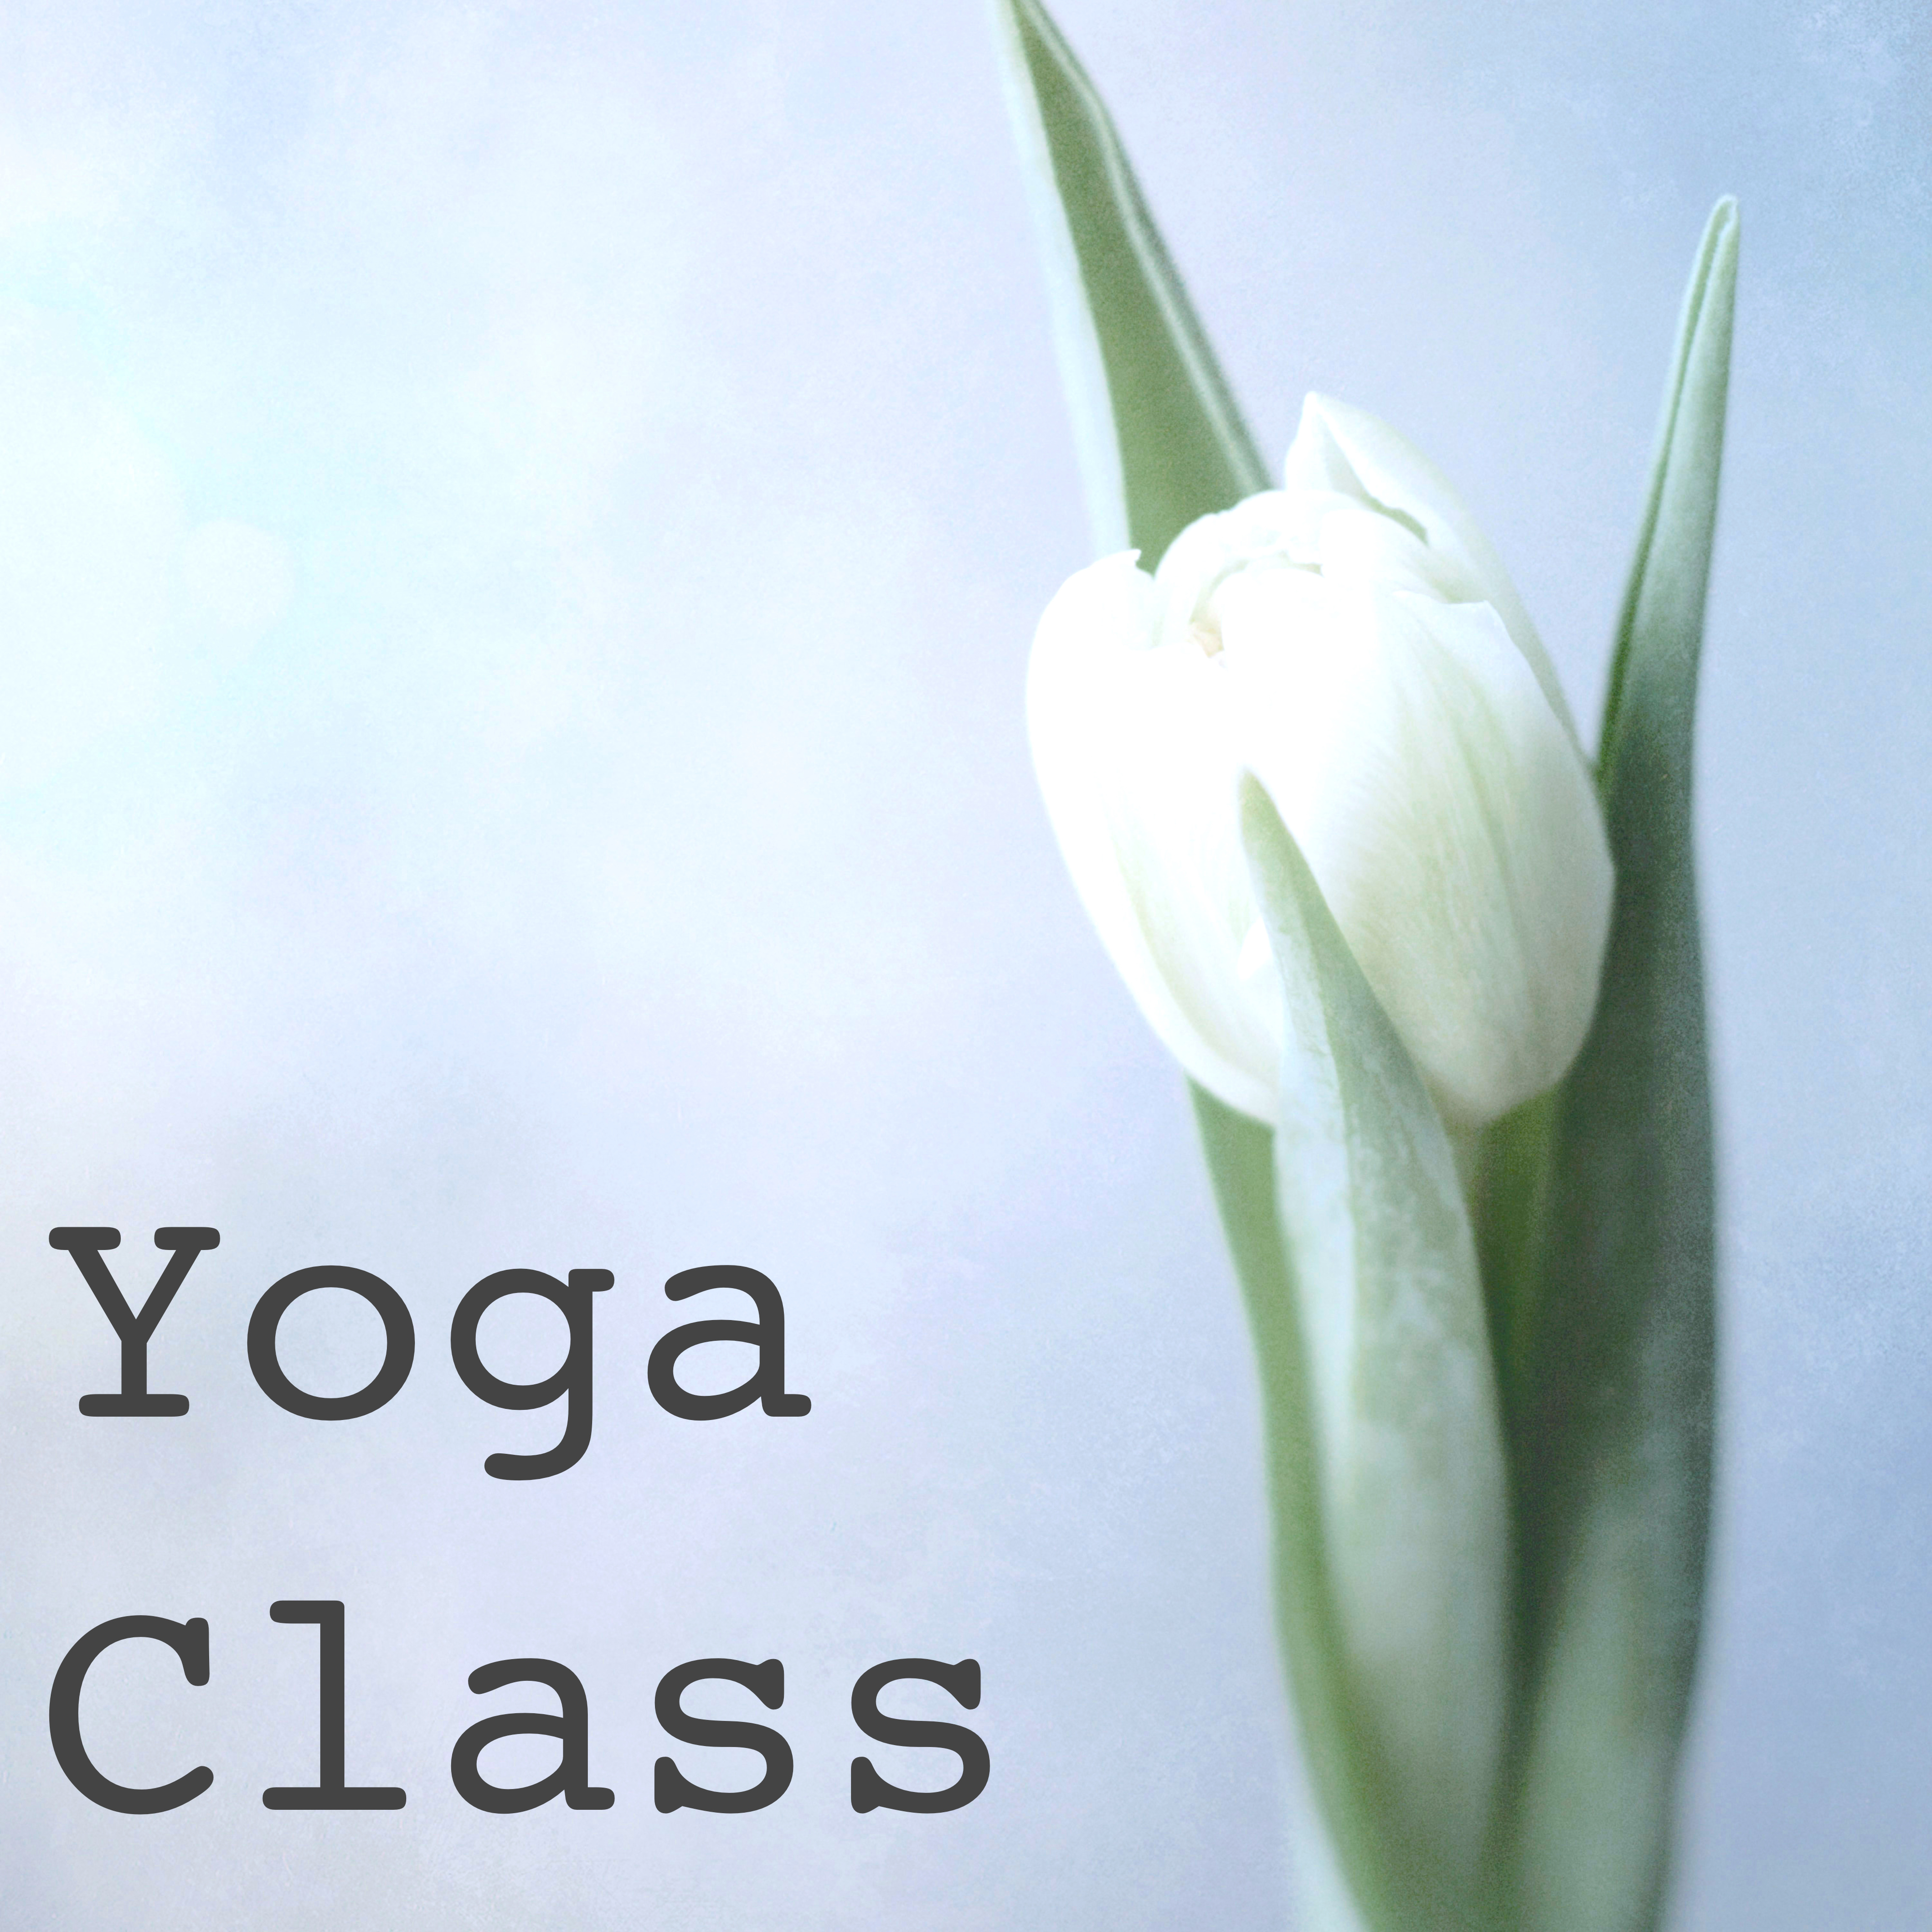 Yoga Class  25 Songs: Deep Meditation Music for Yoga Morning Salutation, Pranayama, Hatha Yoga and Reiki, Best Soothing Piano Songs for Mindfulness